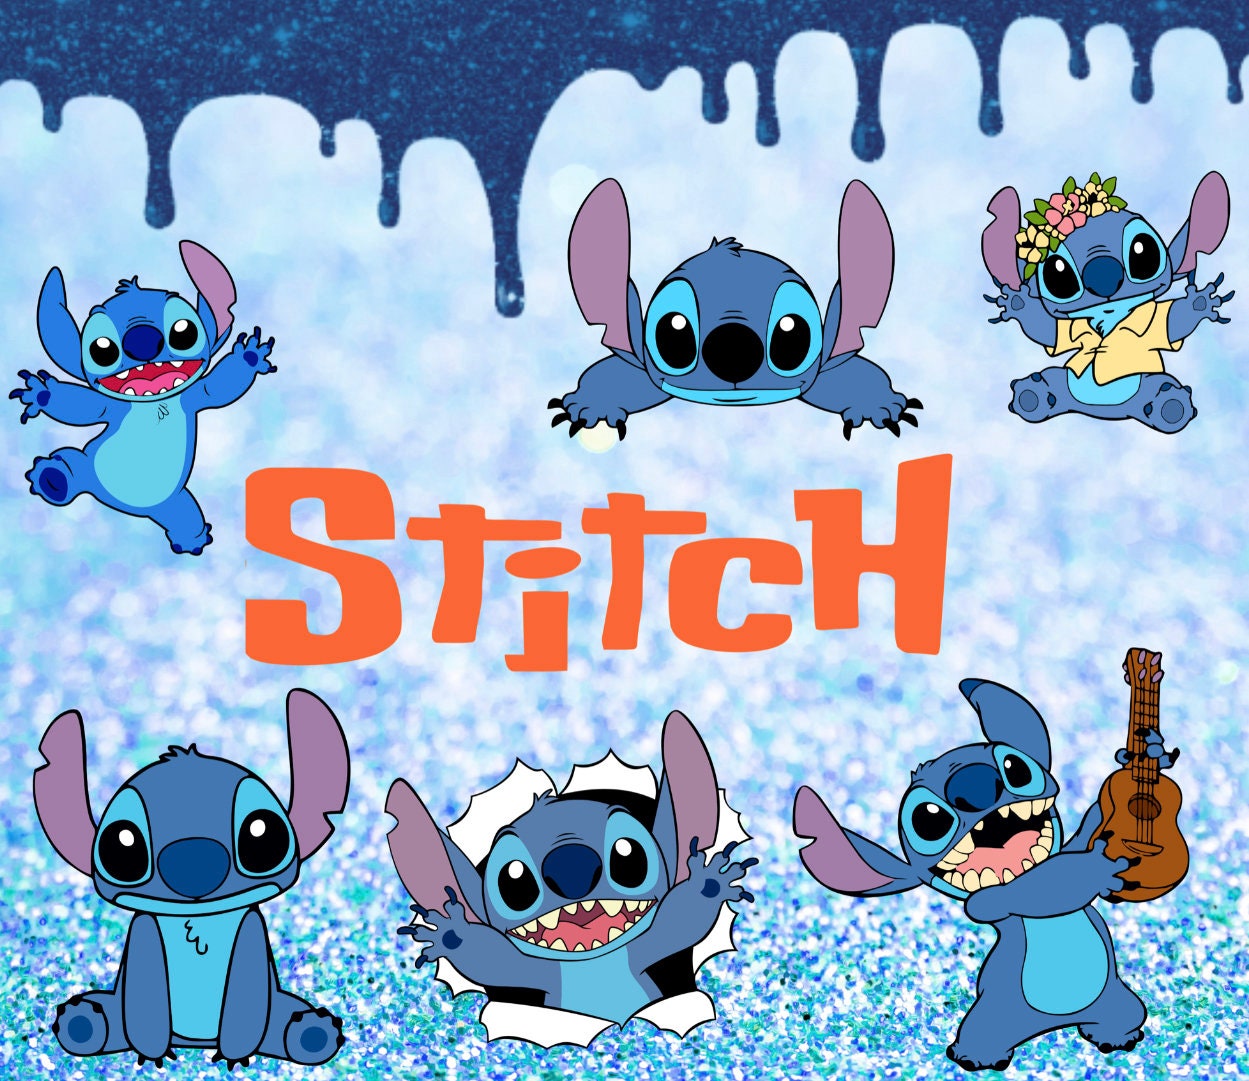 20oz Sublimation Stitch Design - Etsy